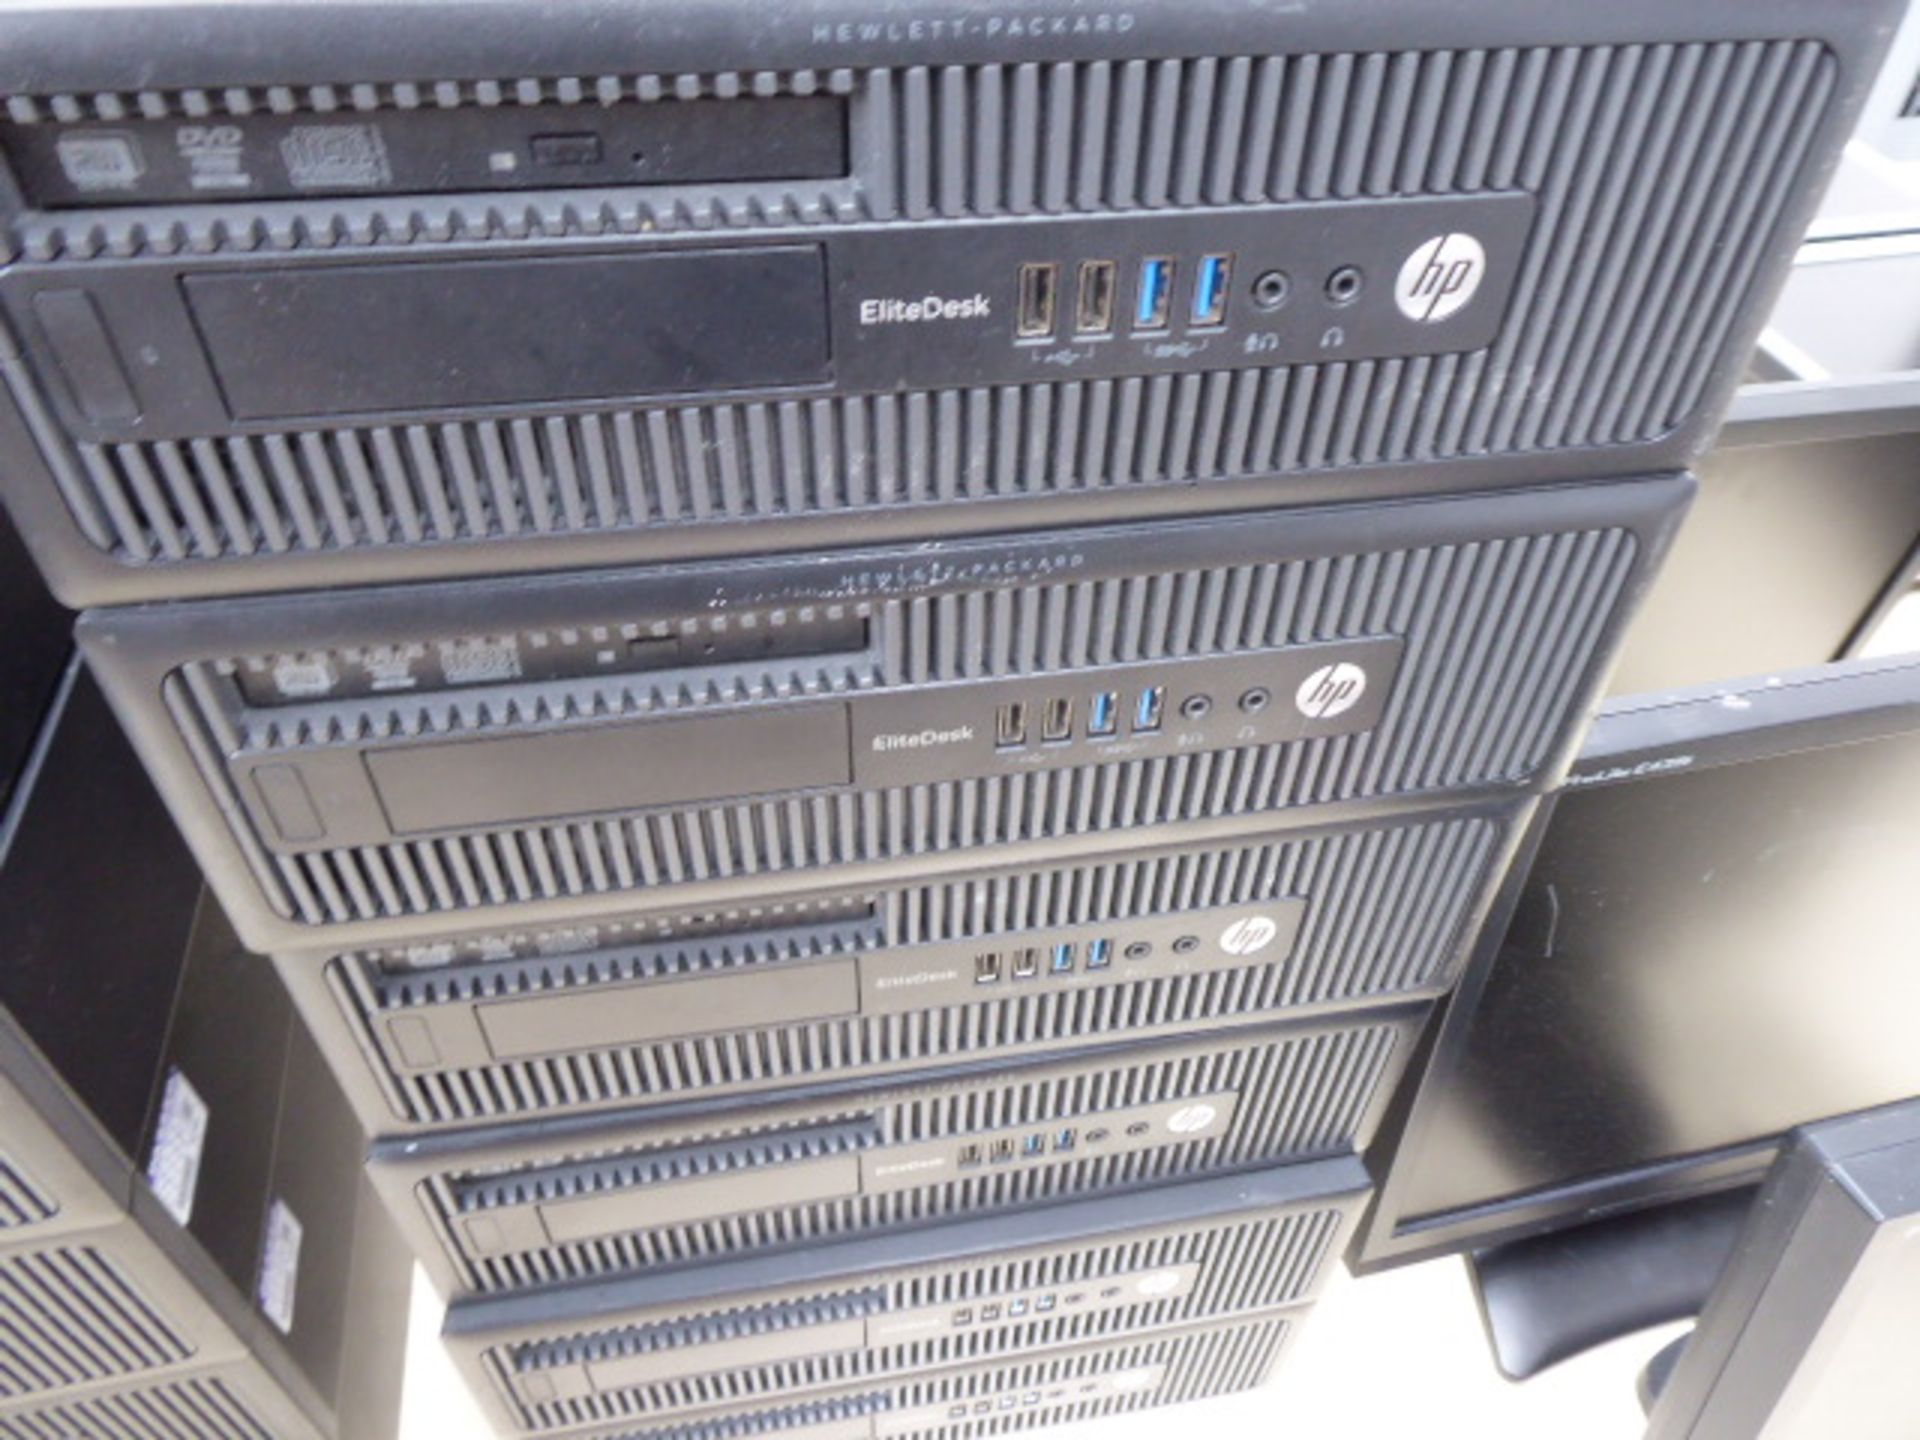 6 HP EliteDesk 800 G1 Intel i5 PC's with 500gb hard drive, no RAM with 6 Iiyama monitors. No - Image 2 of 2